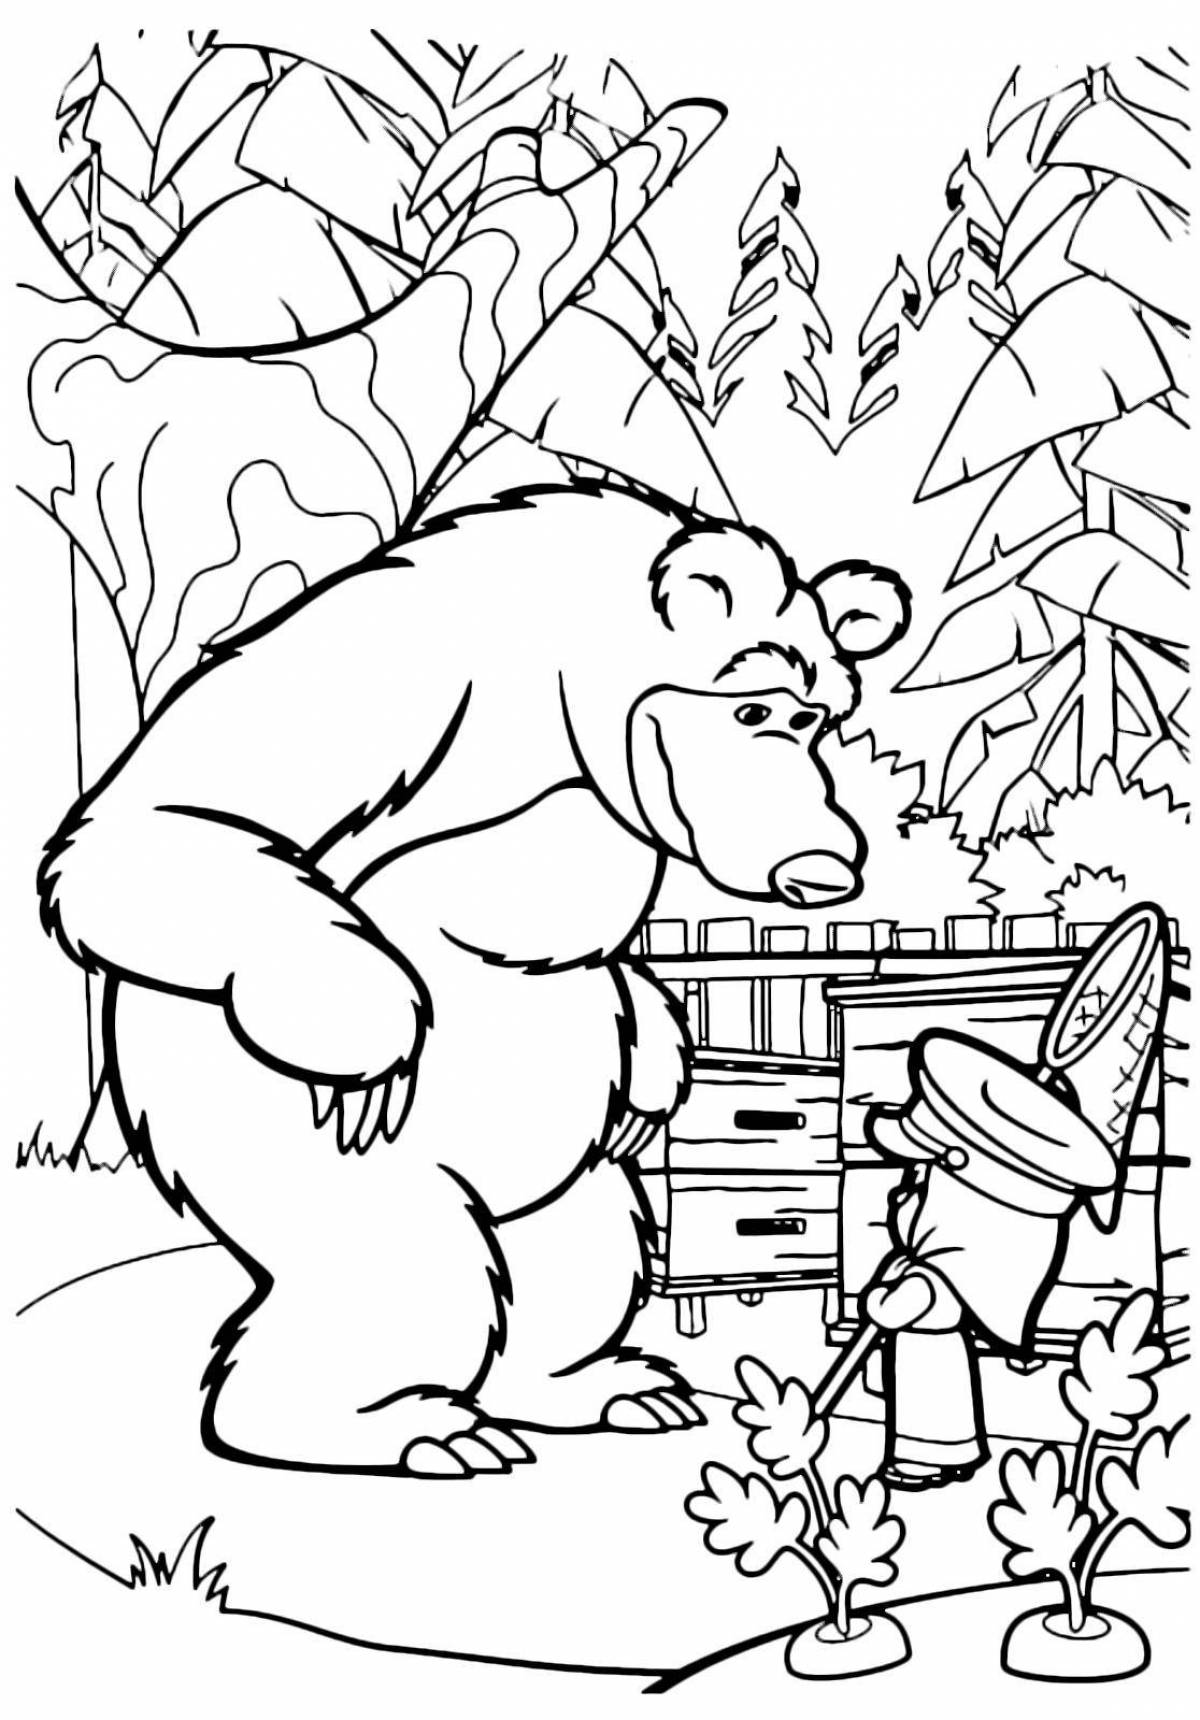 Charming masha and the bear coloring book